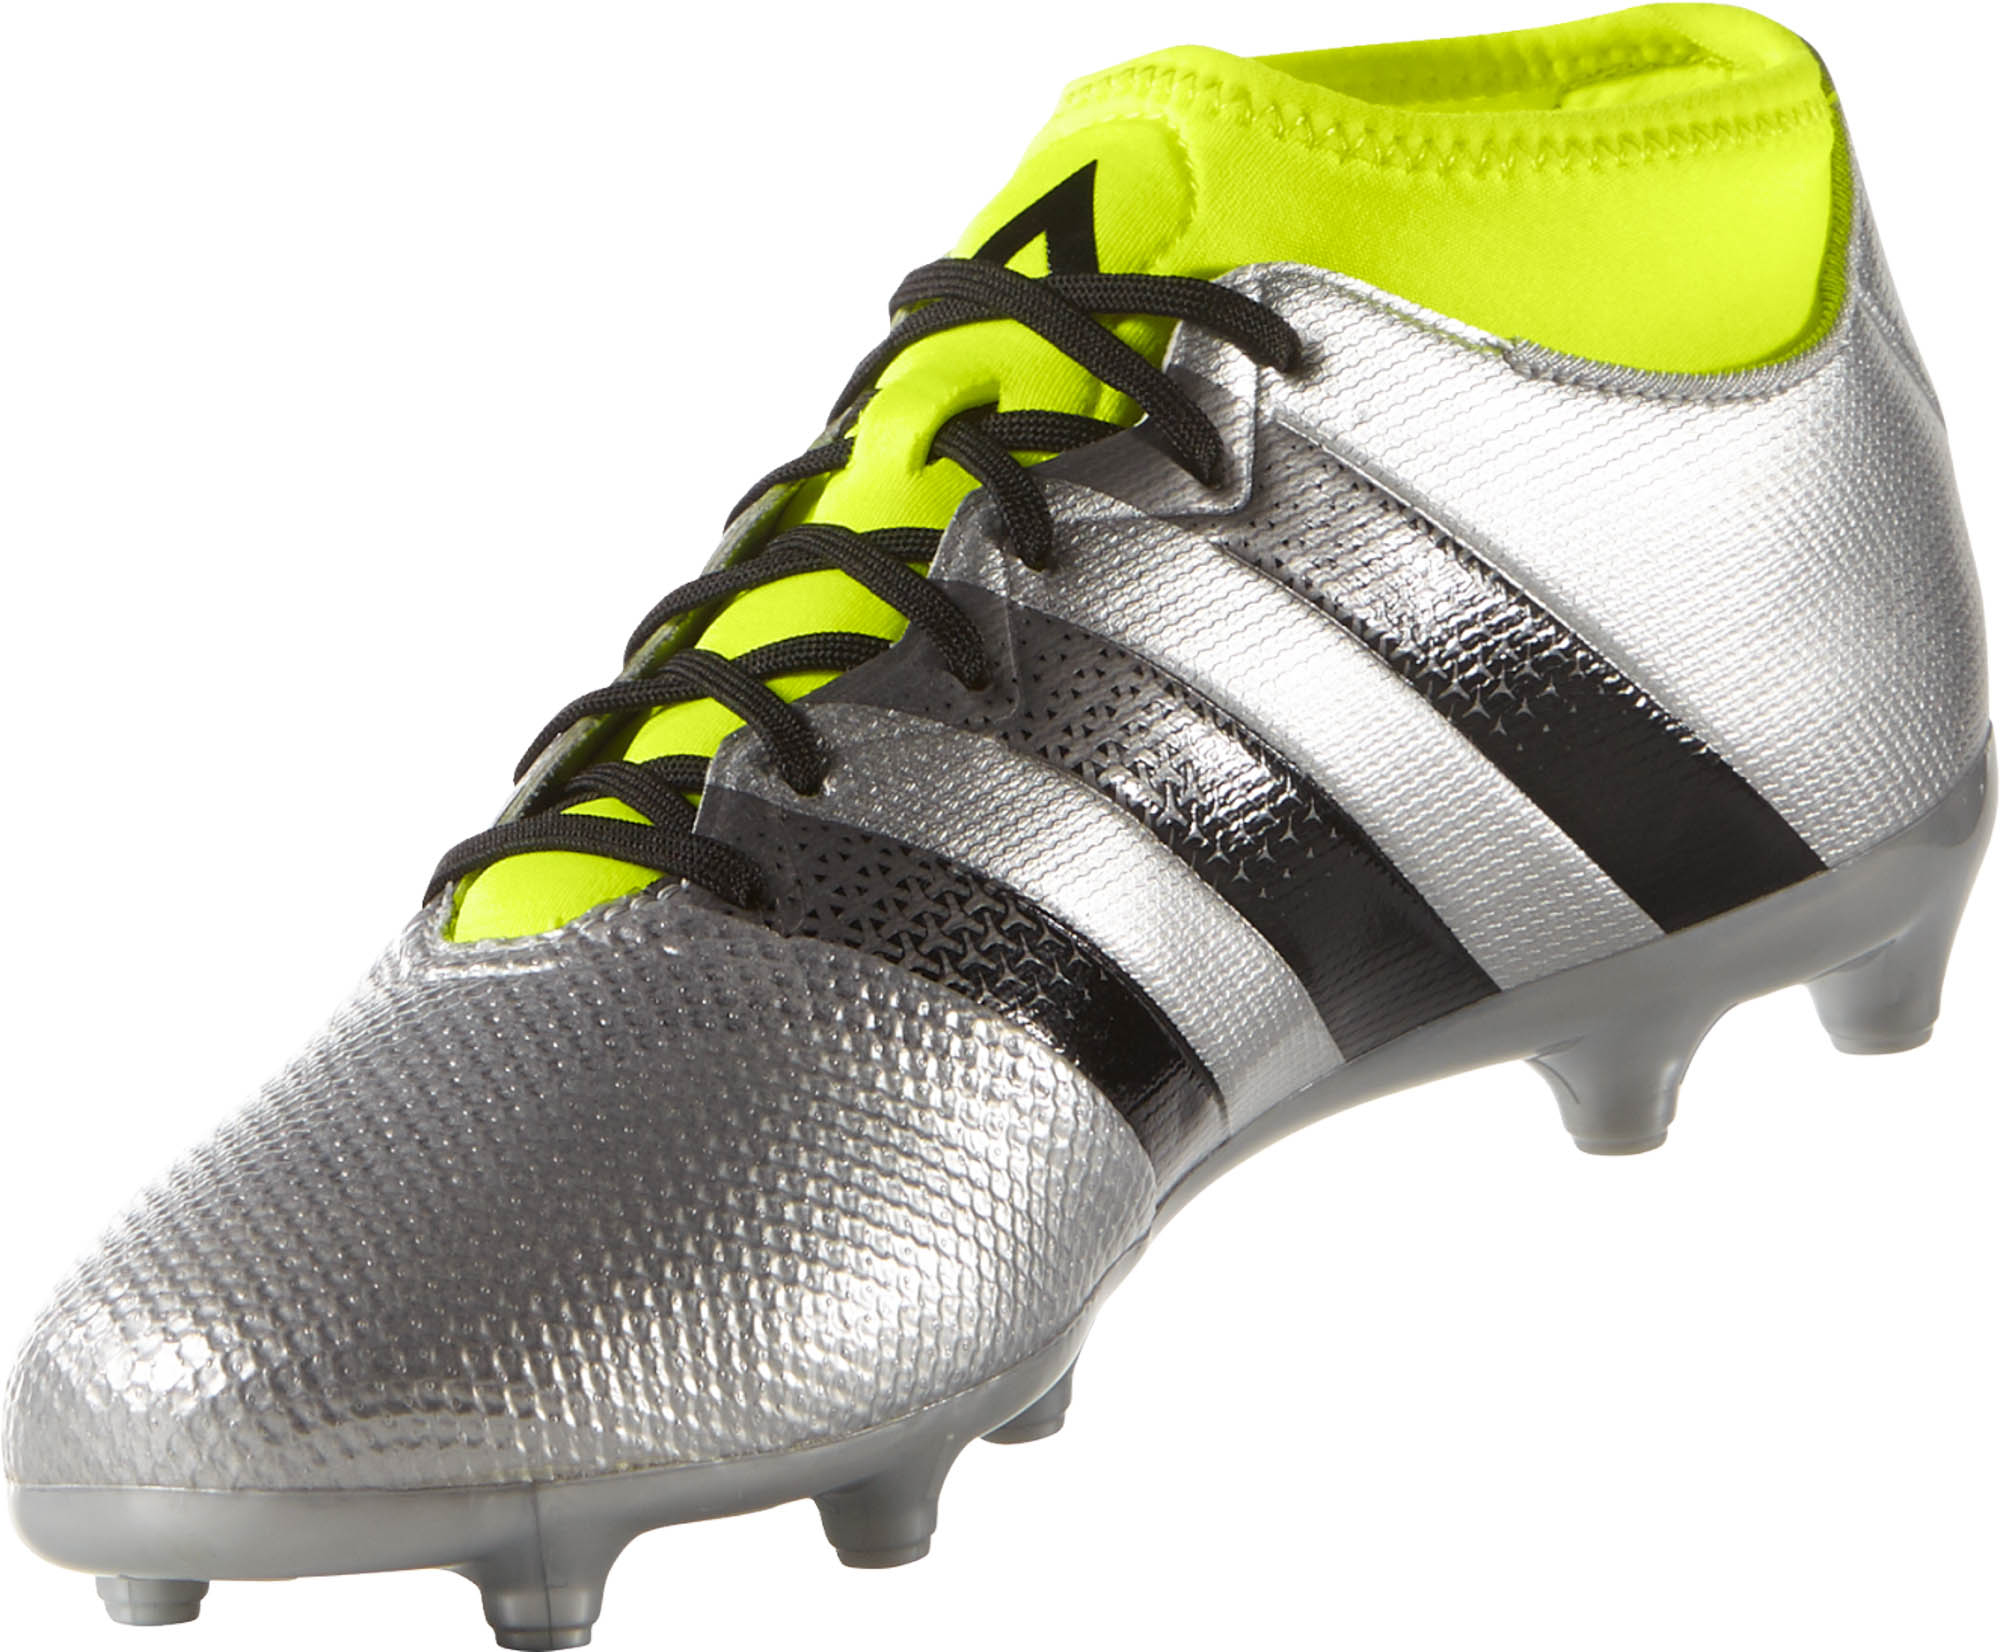 Negen belegd broodje ik ben trots adidas ACE 16.3 Primemesh FG Cleats - Silver adidas Soccer Shoes